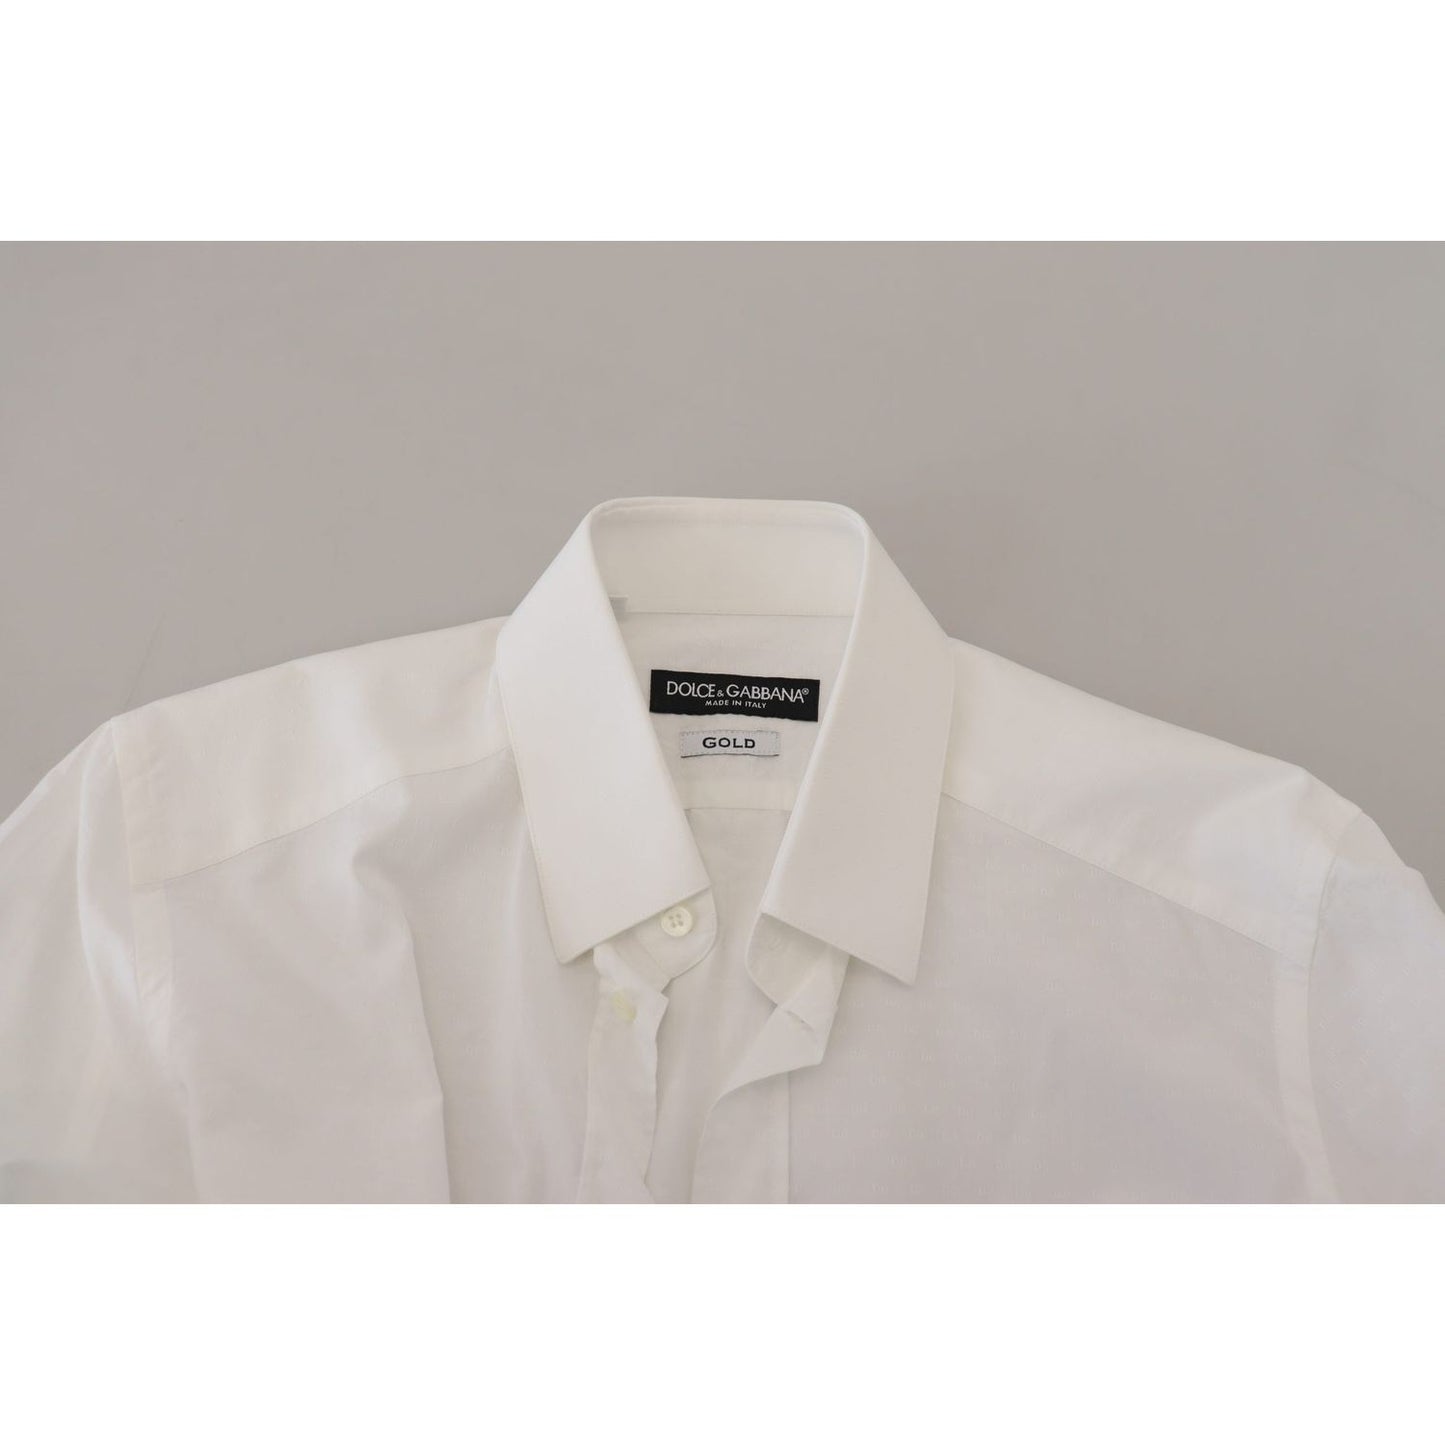 Dolce & Gabbana Elegant White Cotton Dress Shirt Slim Fit white-cotton-slim-fit-formal-dress-gold-shirt-2